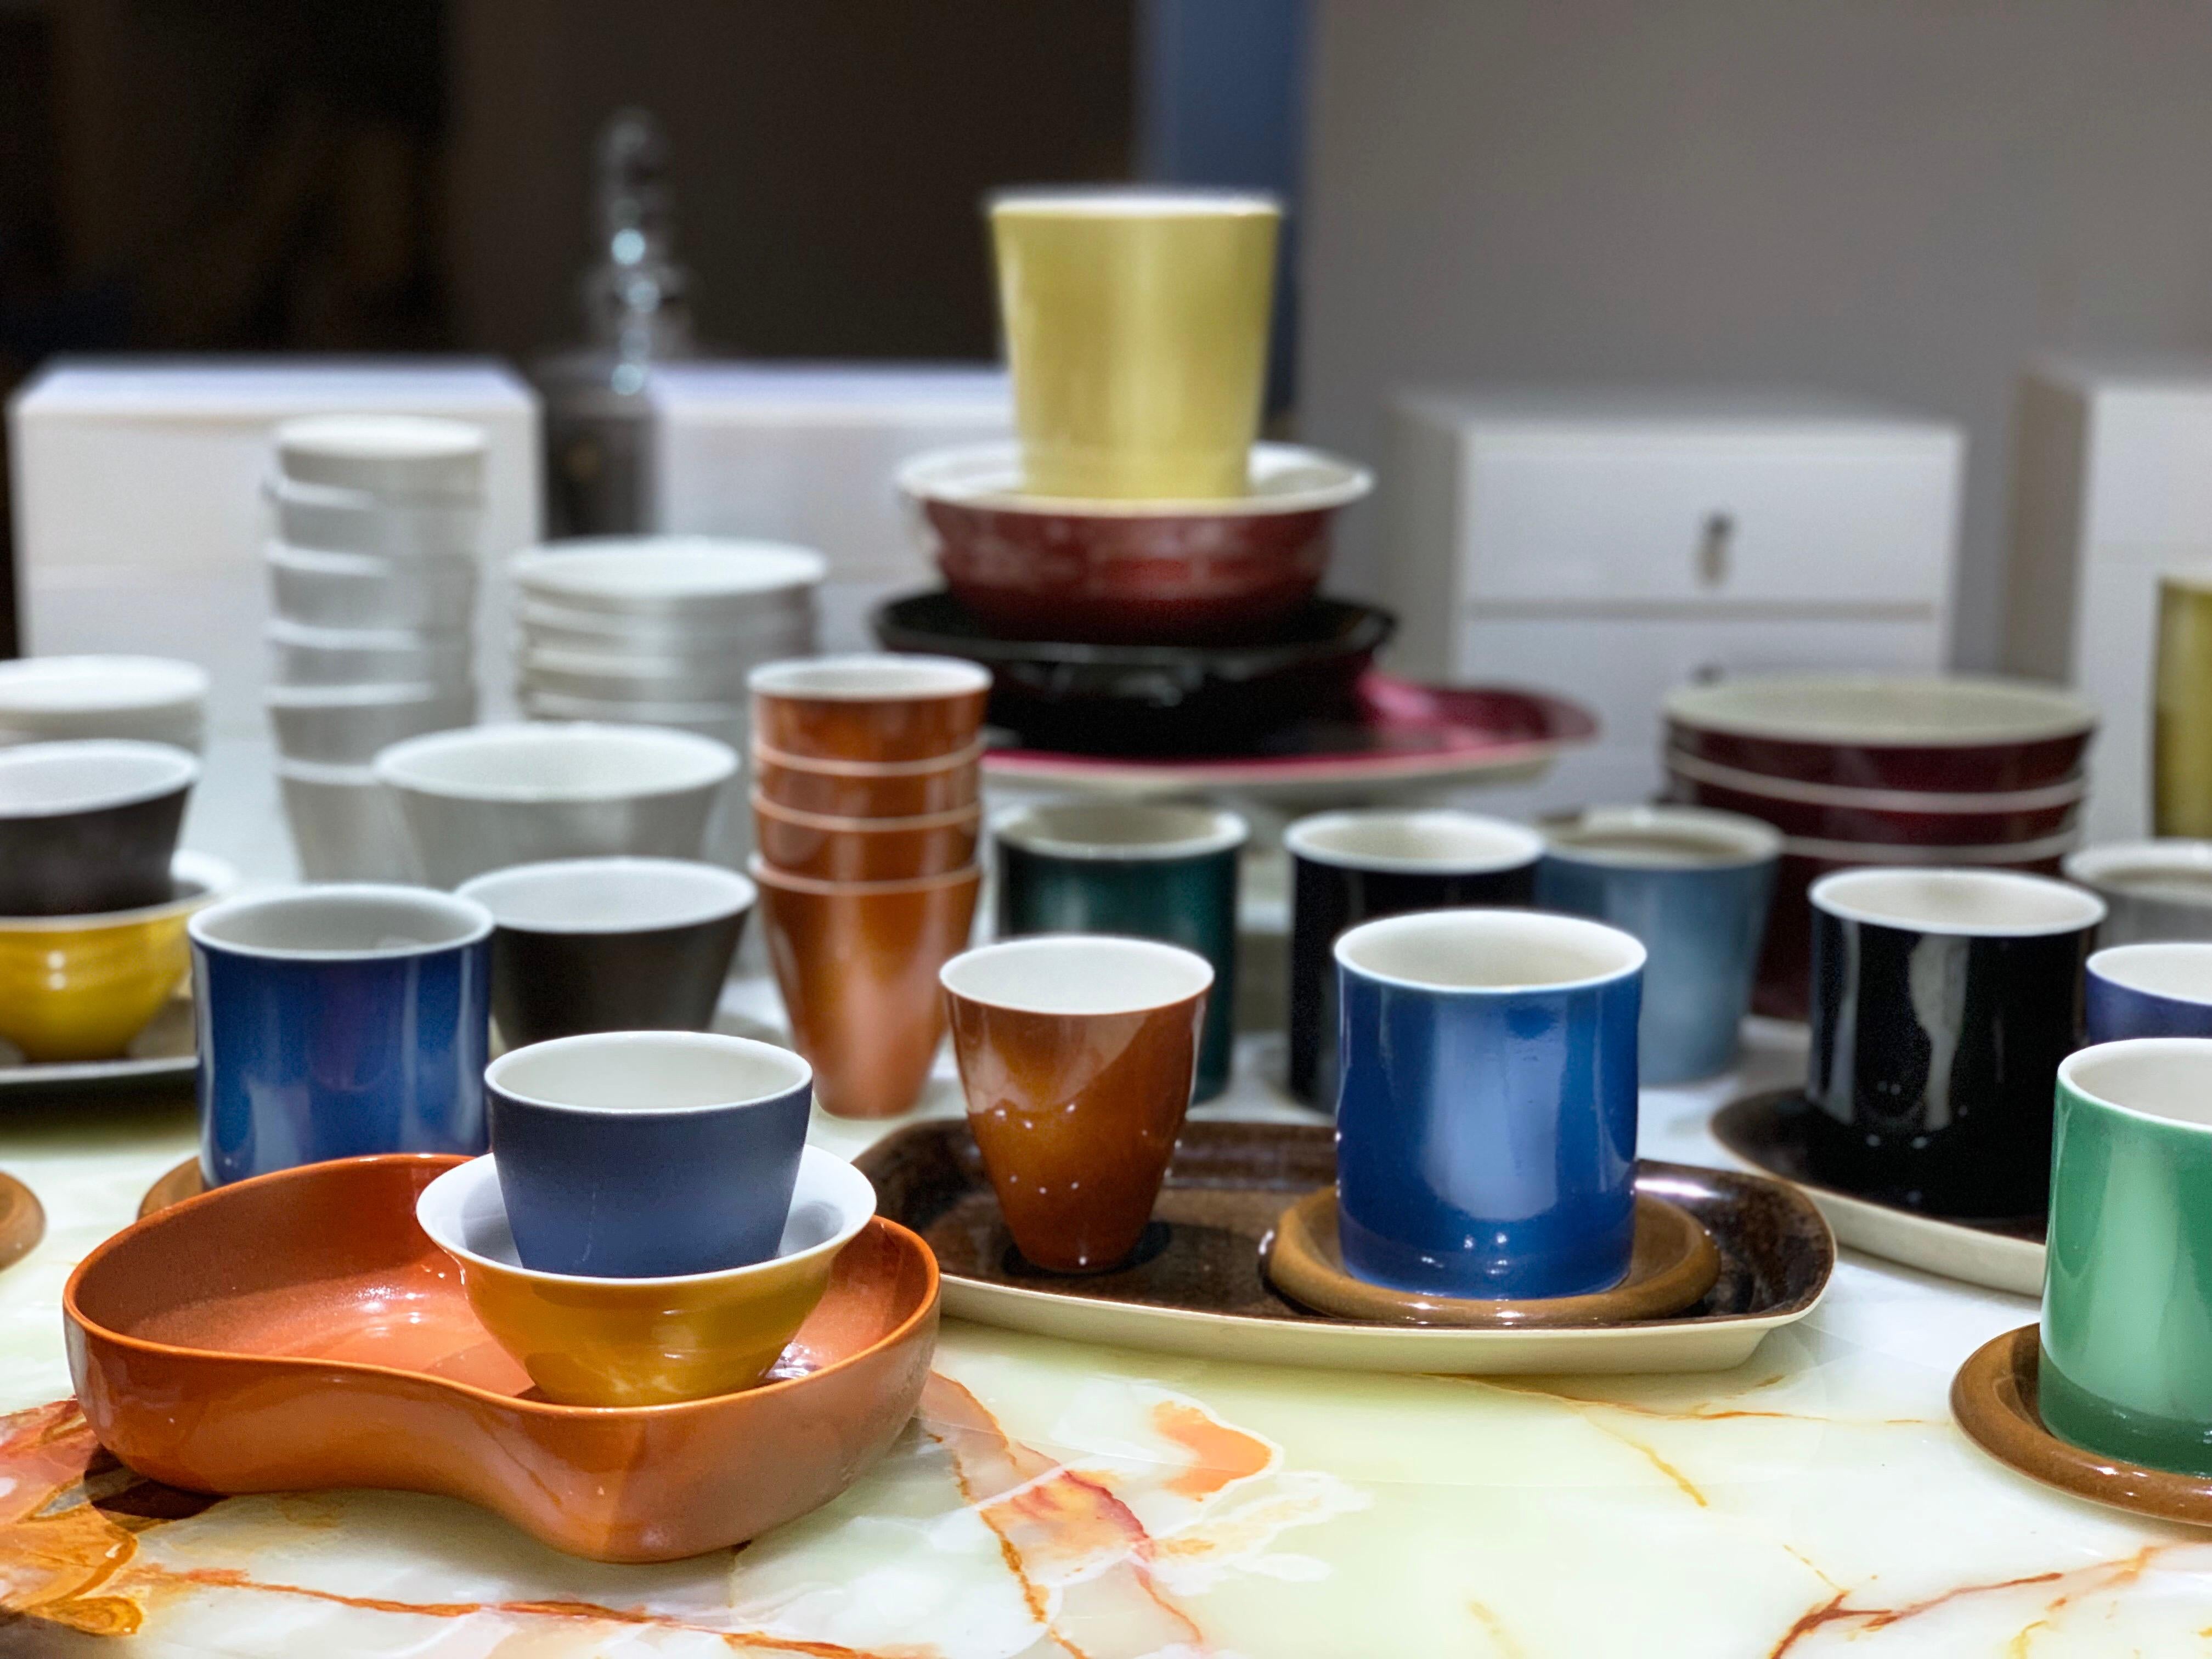 Lietzke Studio Porcelain Tableware Set, Midcentury Modern Art Pottery Ceramics.   Largest collection of Lietzke 